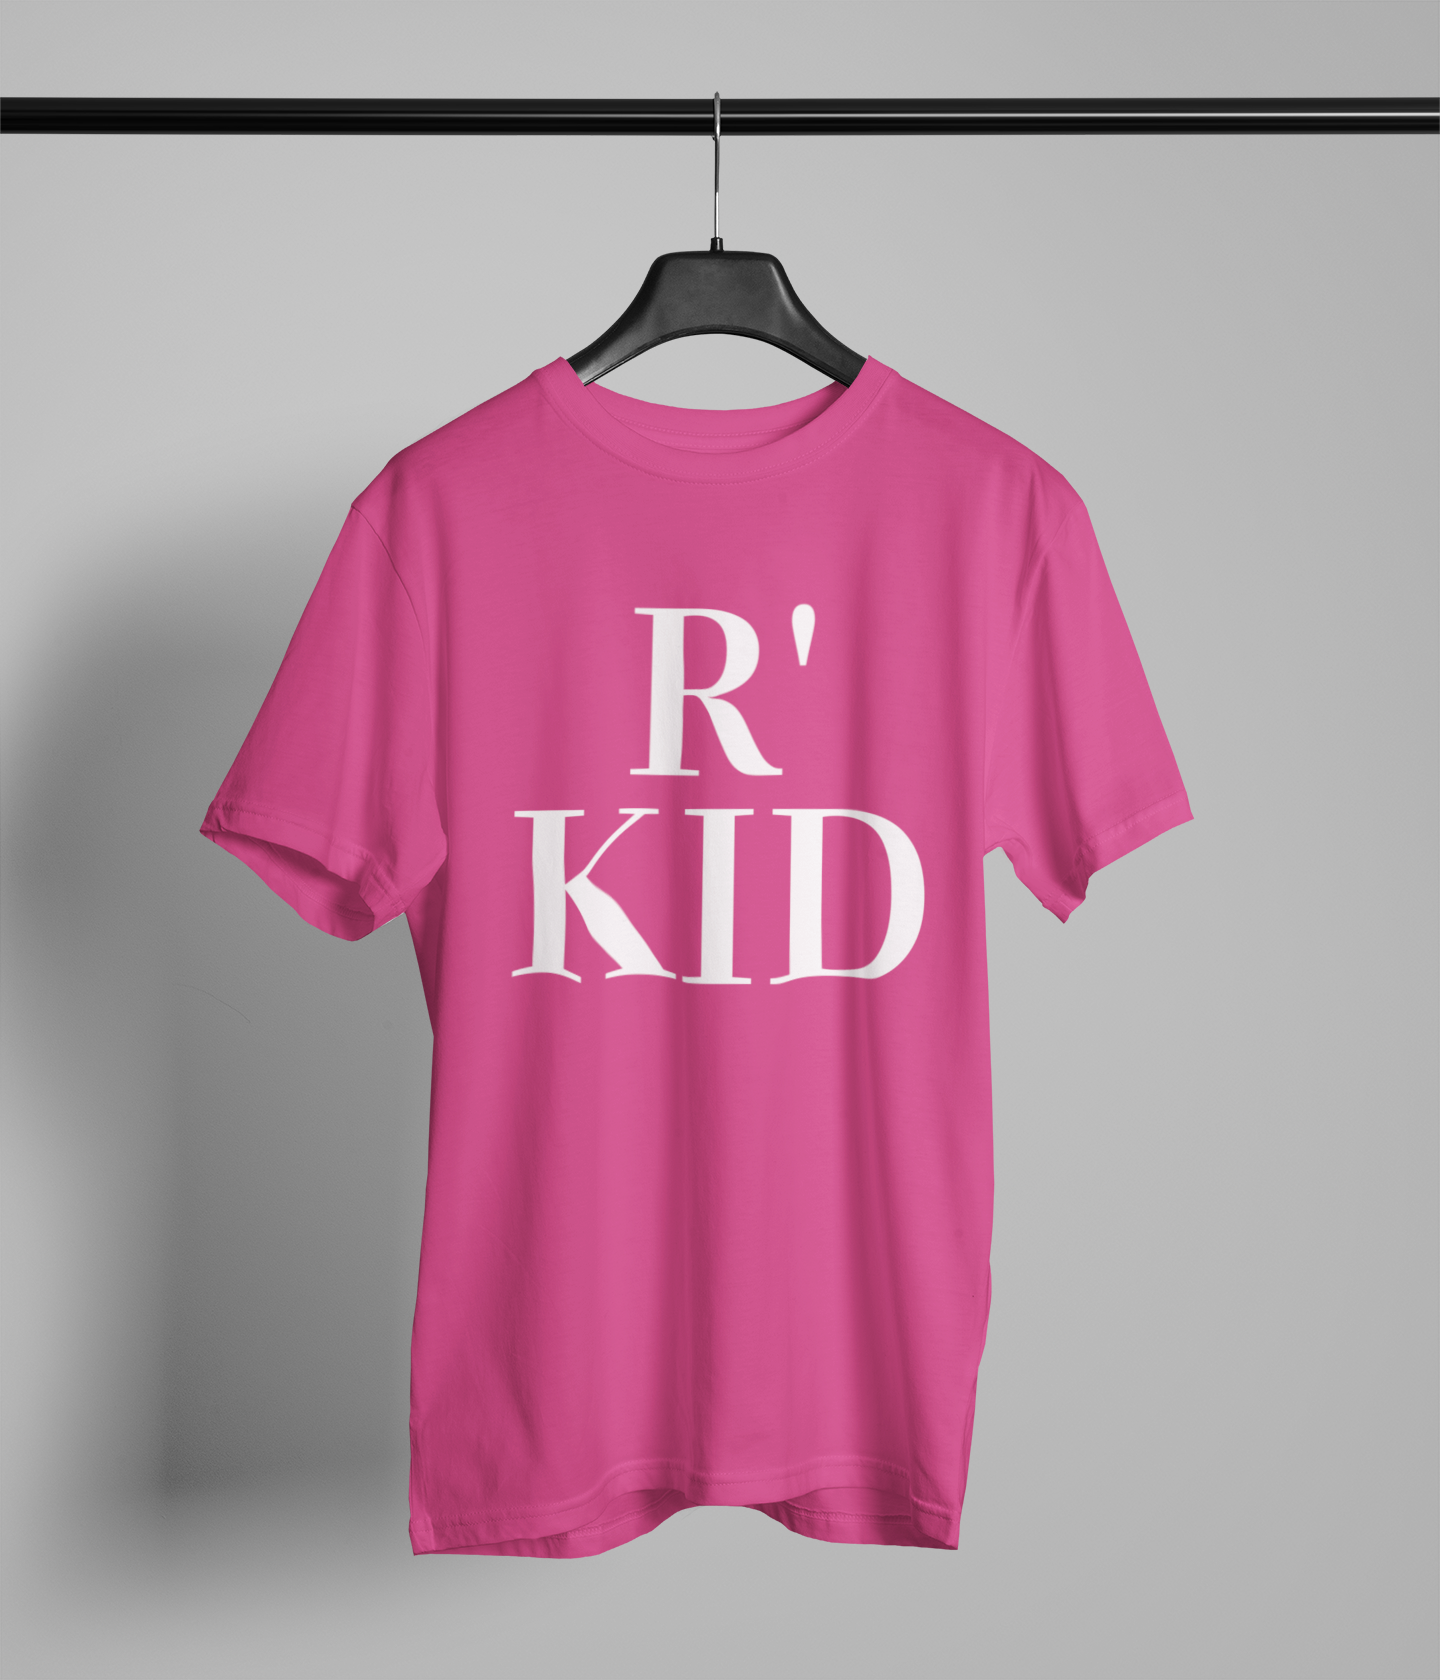 R'KID Northern Slang T-shirt Unisex